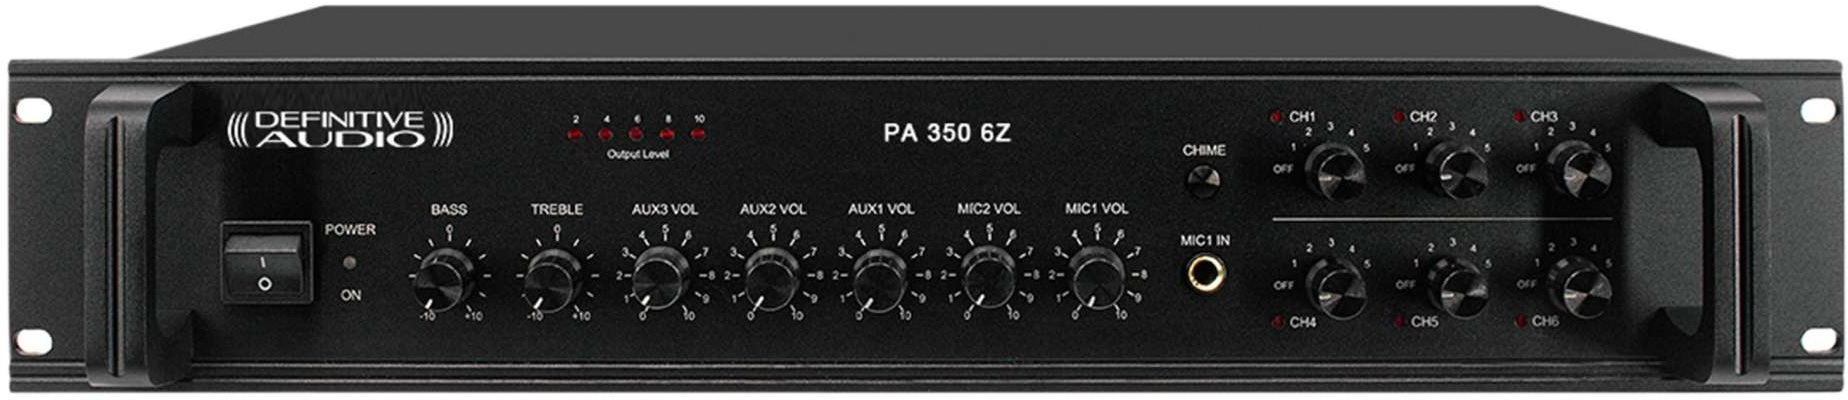 Definitive Audio Pa 350 6z - Multiple channels power amplifier - Main picture